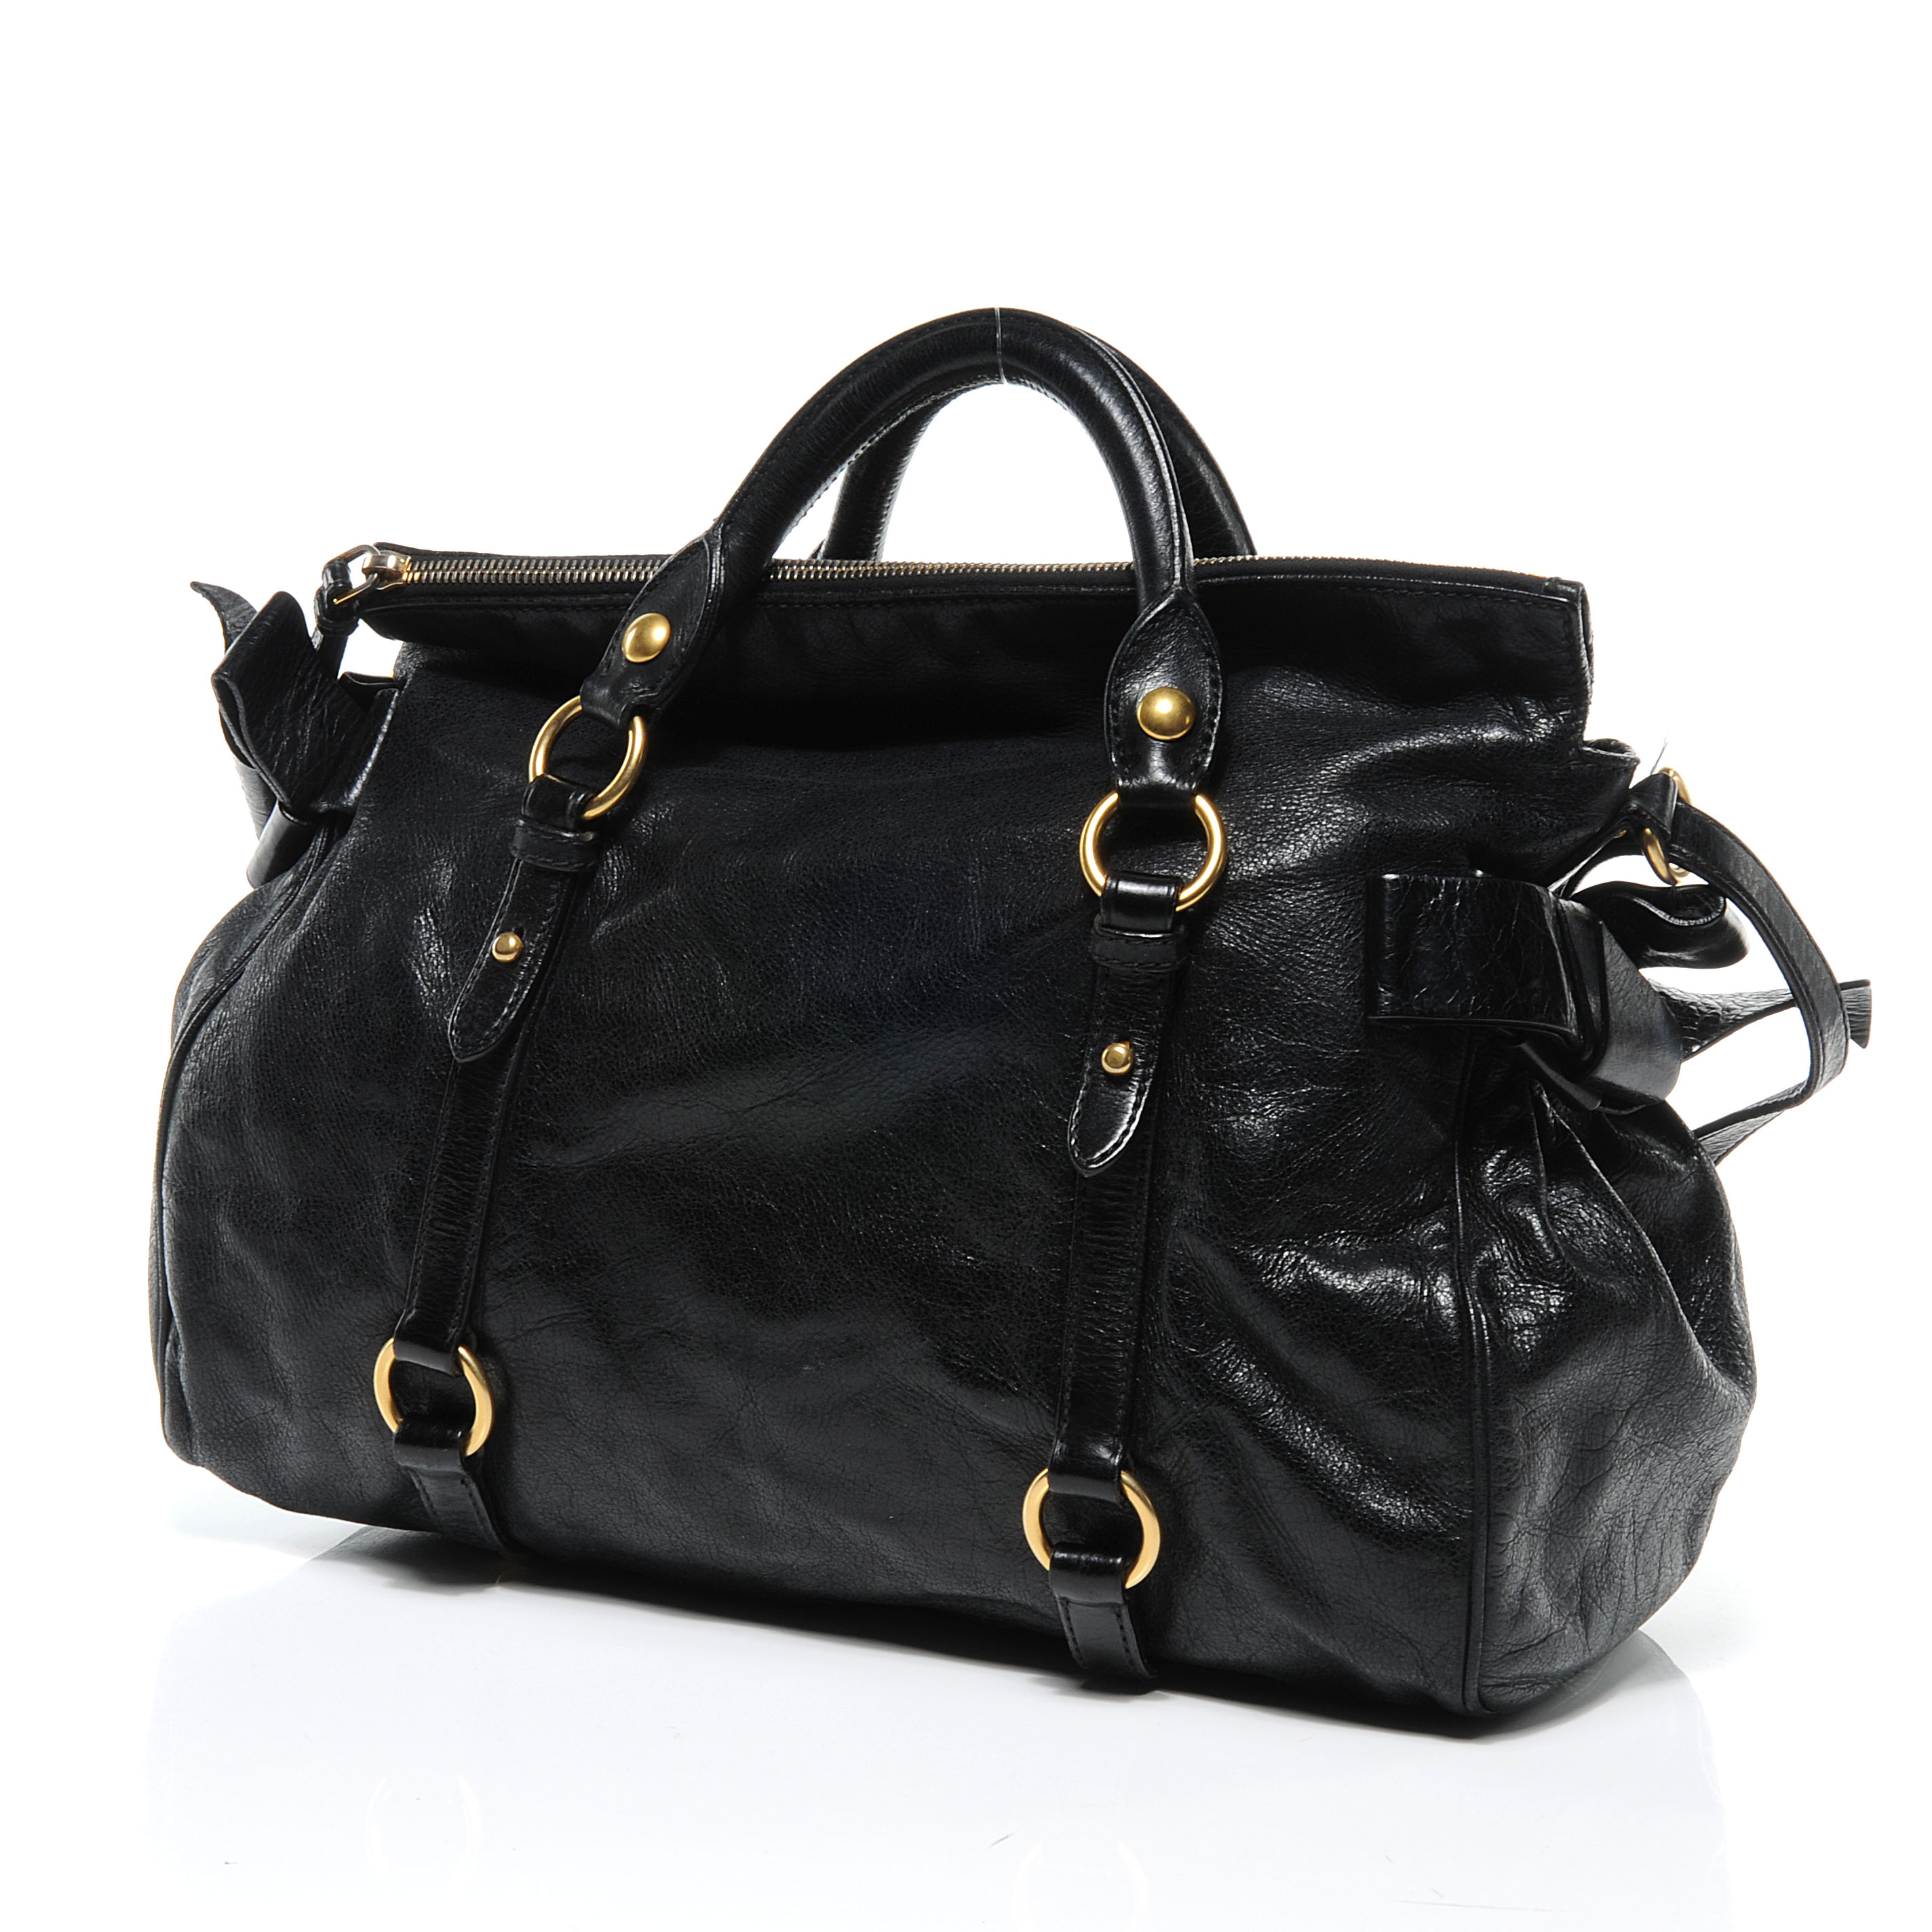 MIU MIU Vitello Lux Large Bow Bag Nero Black 54037